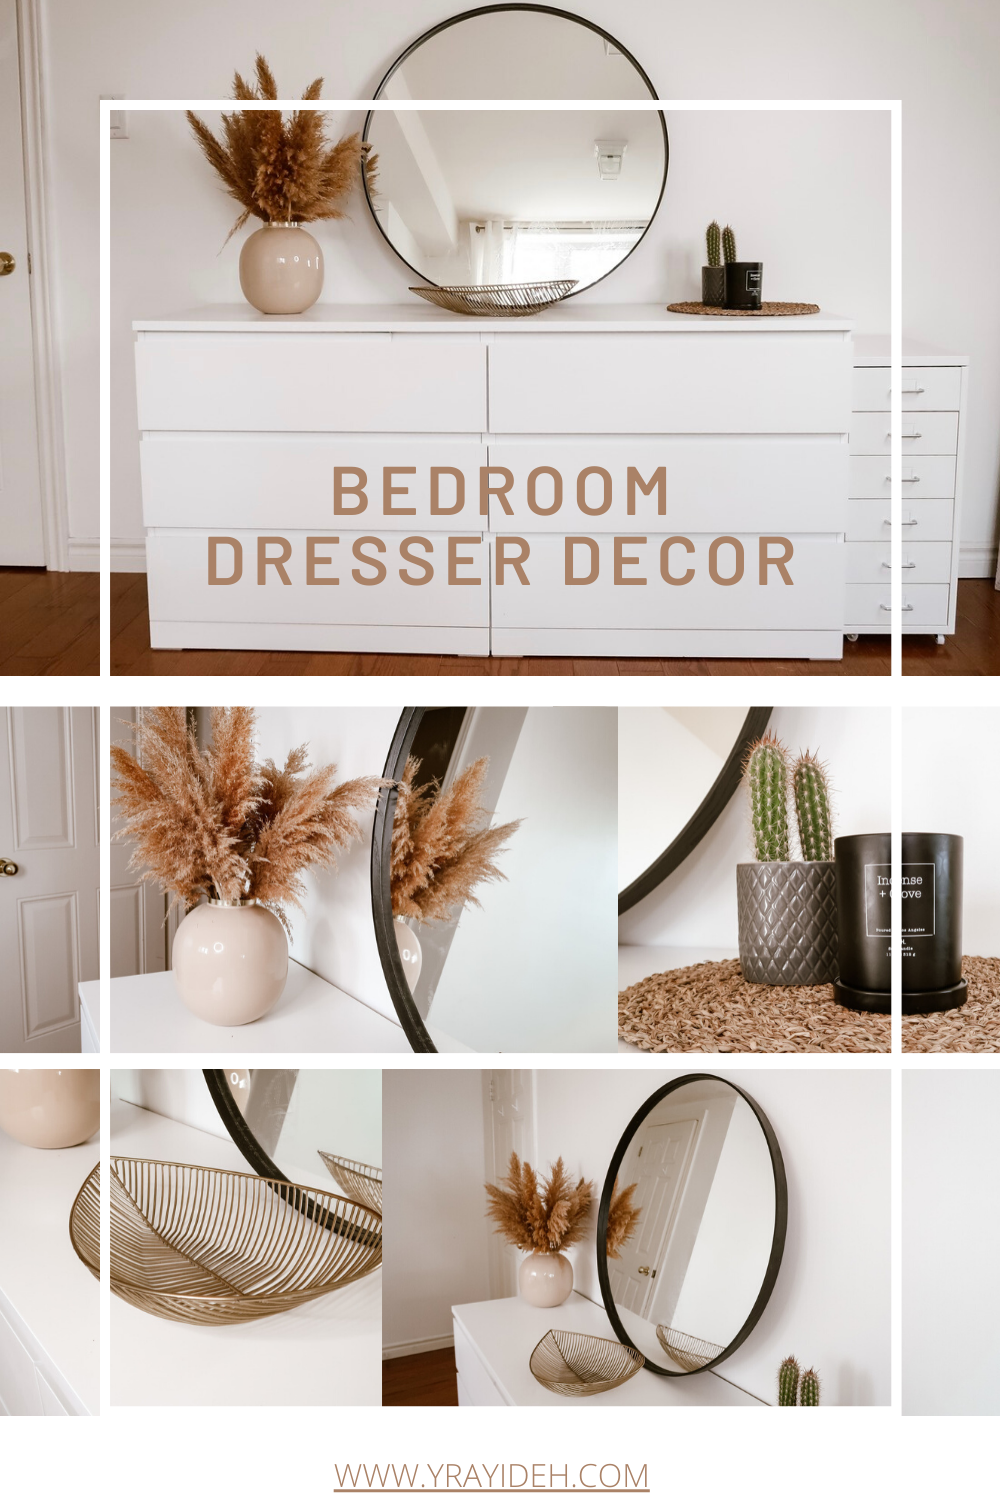 decorate a bedroom dresser